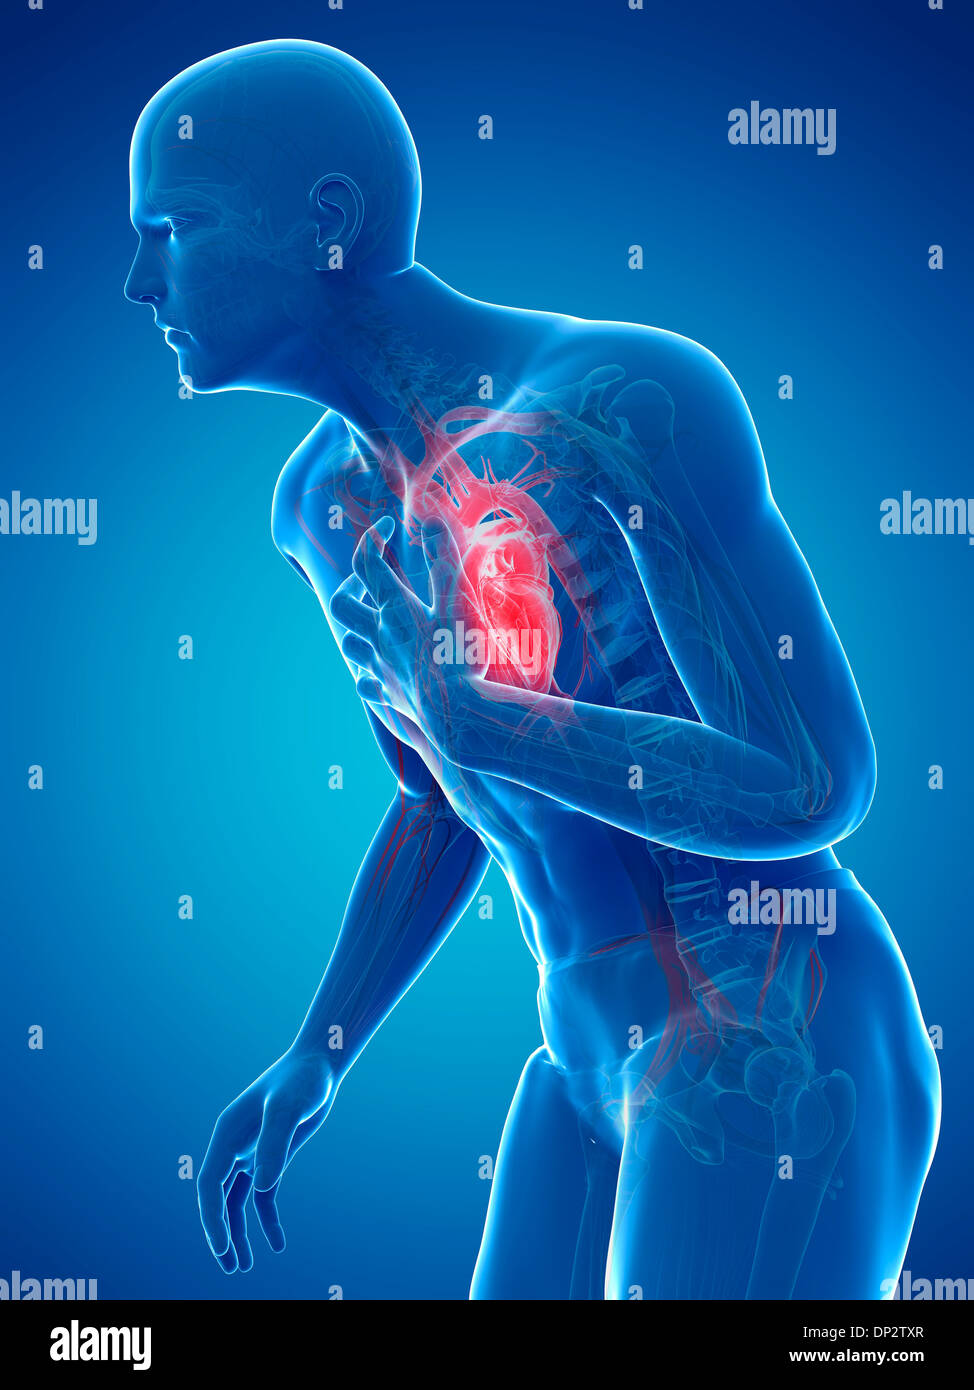 Heart attack, artwork Stock Photo - Alamy